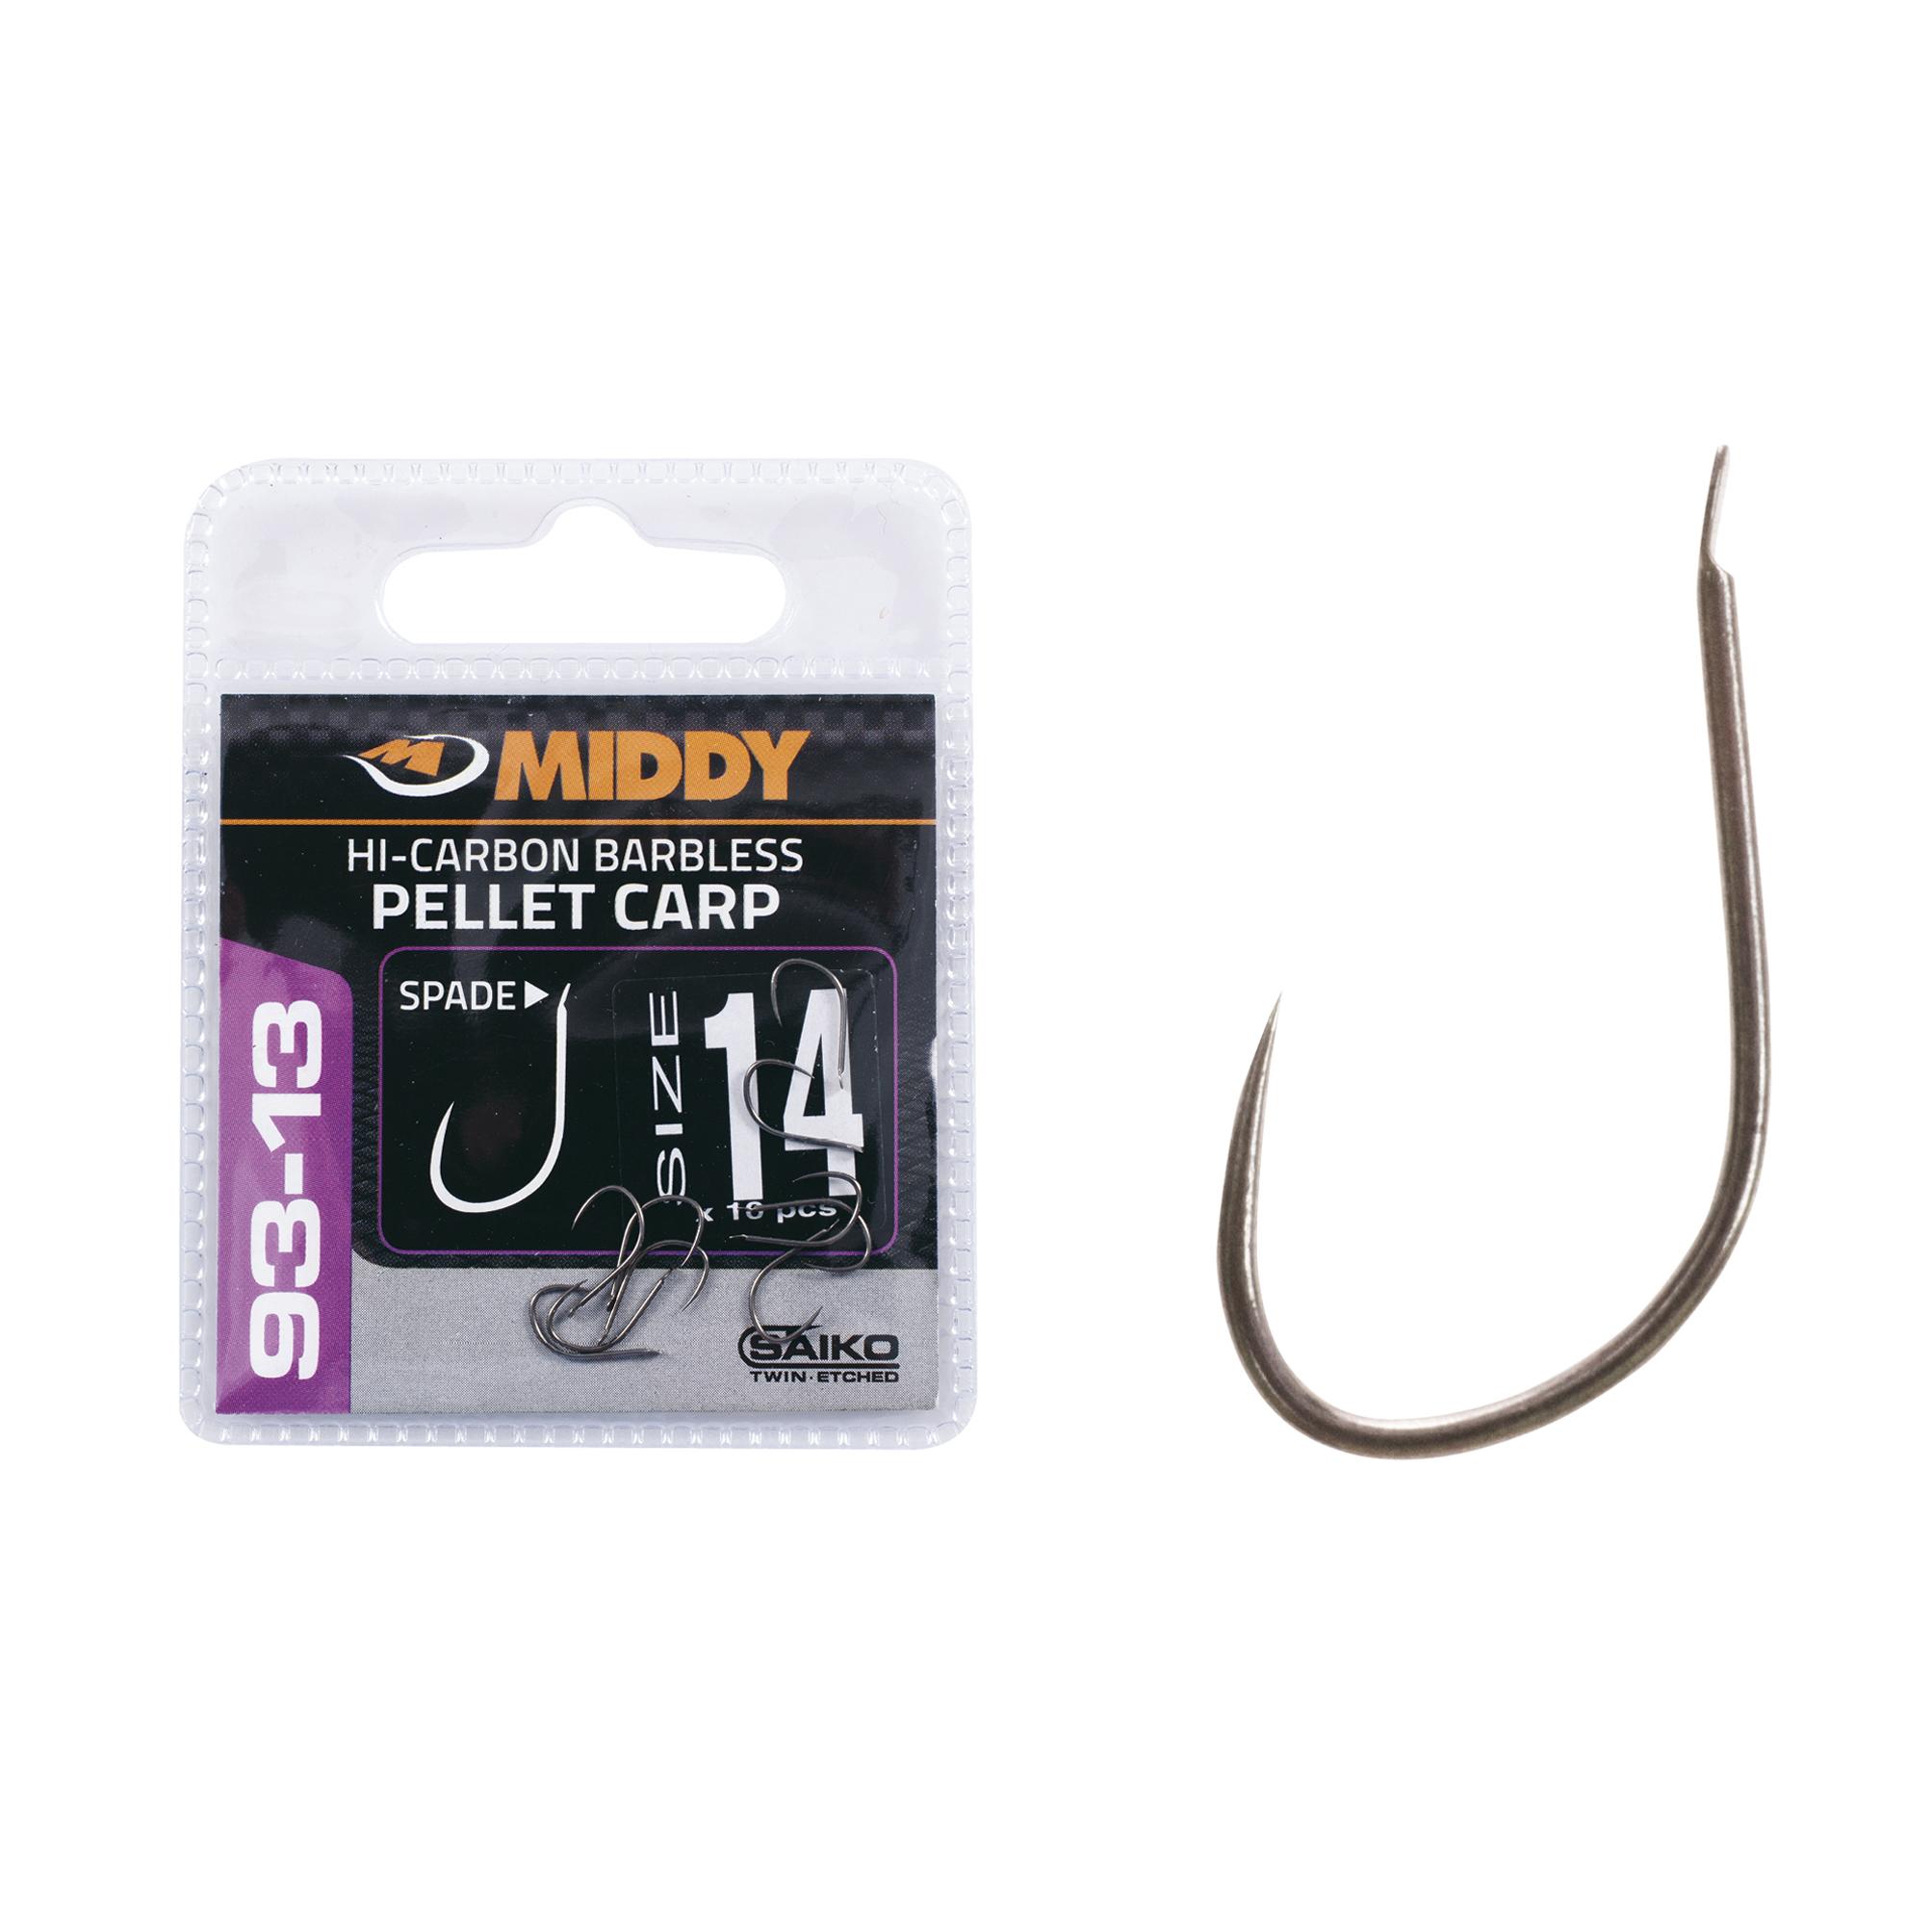 Middy 93-13 Pellet Carp Spade Hooks 16s (10pc)